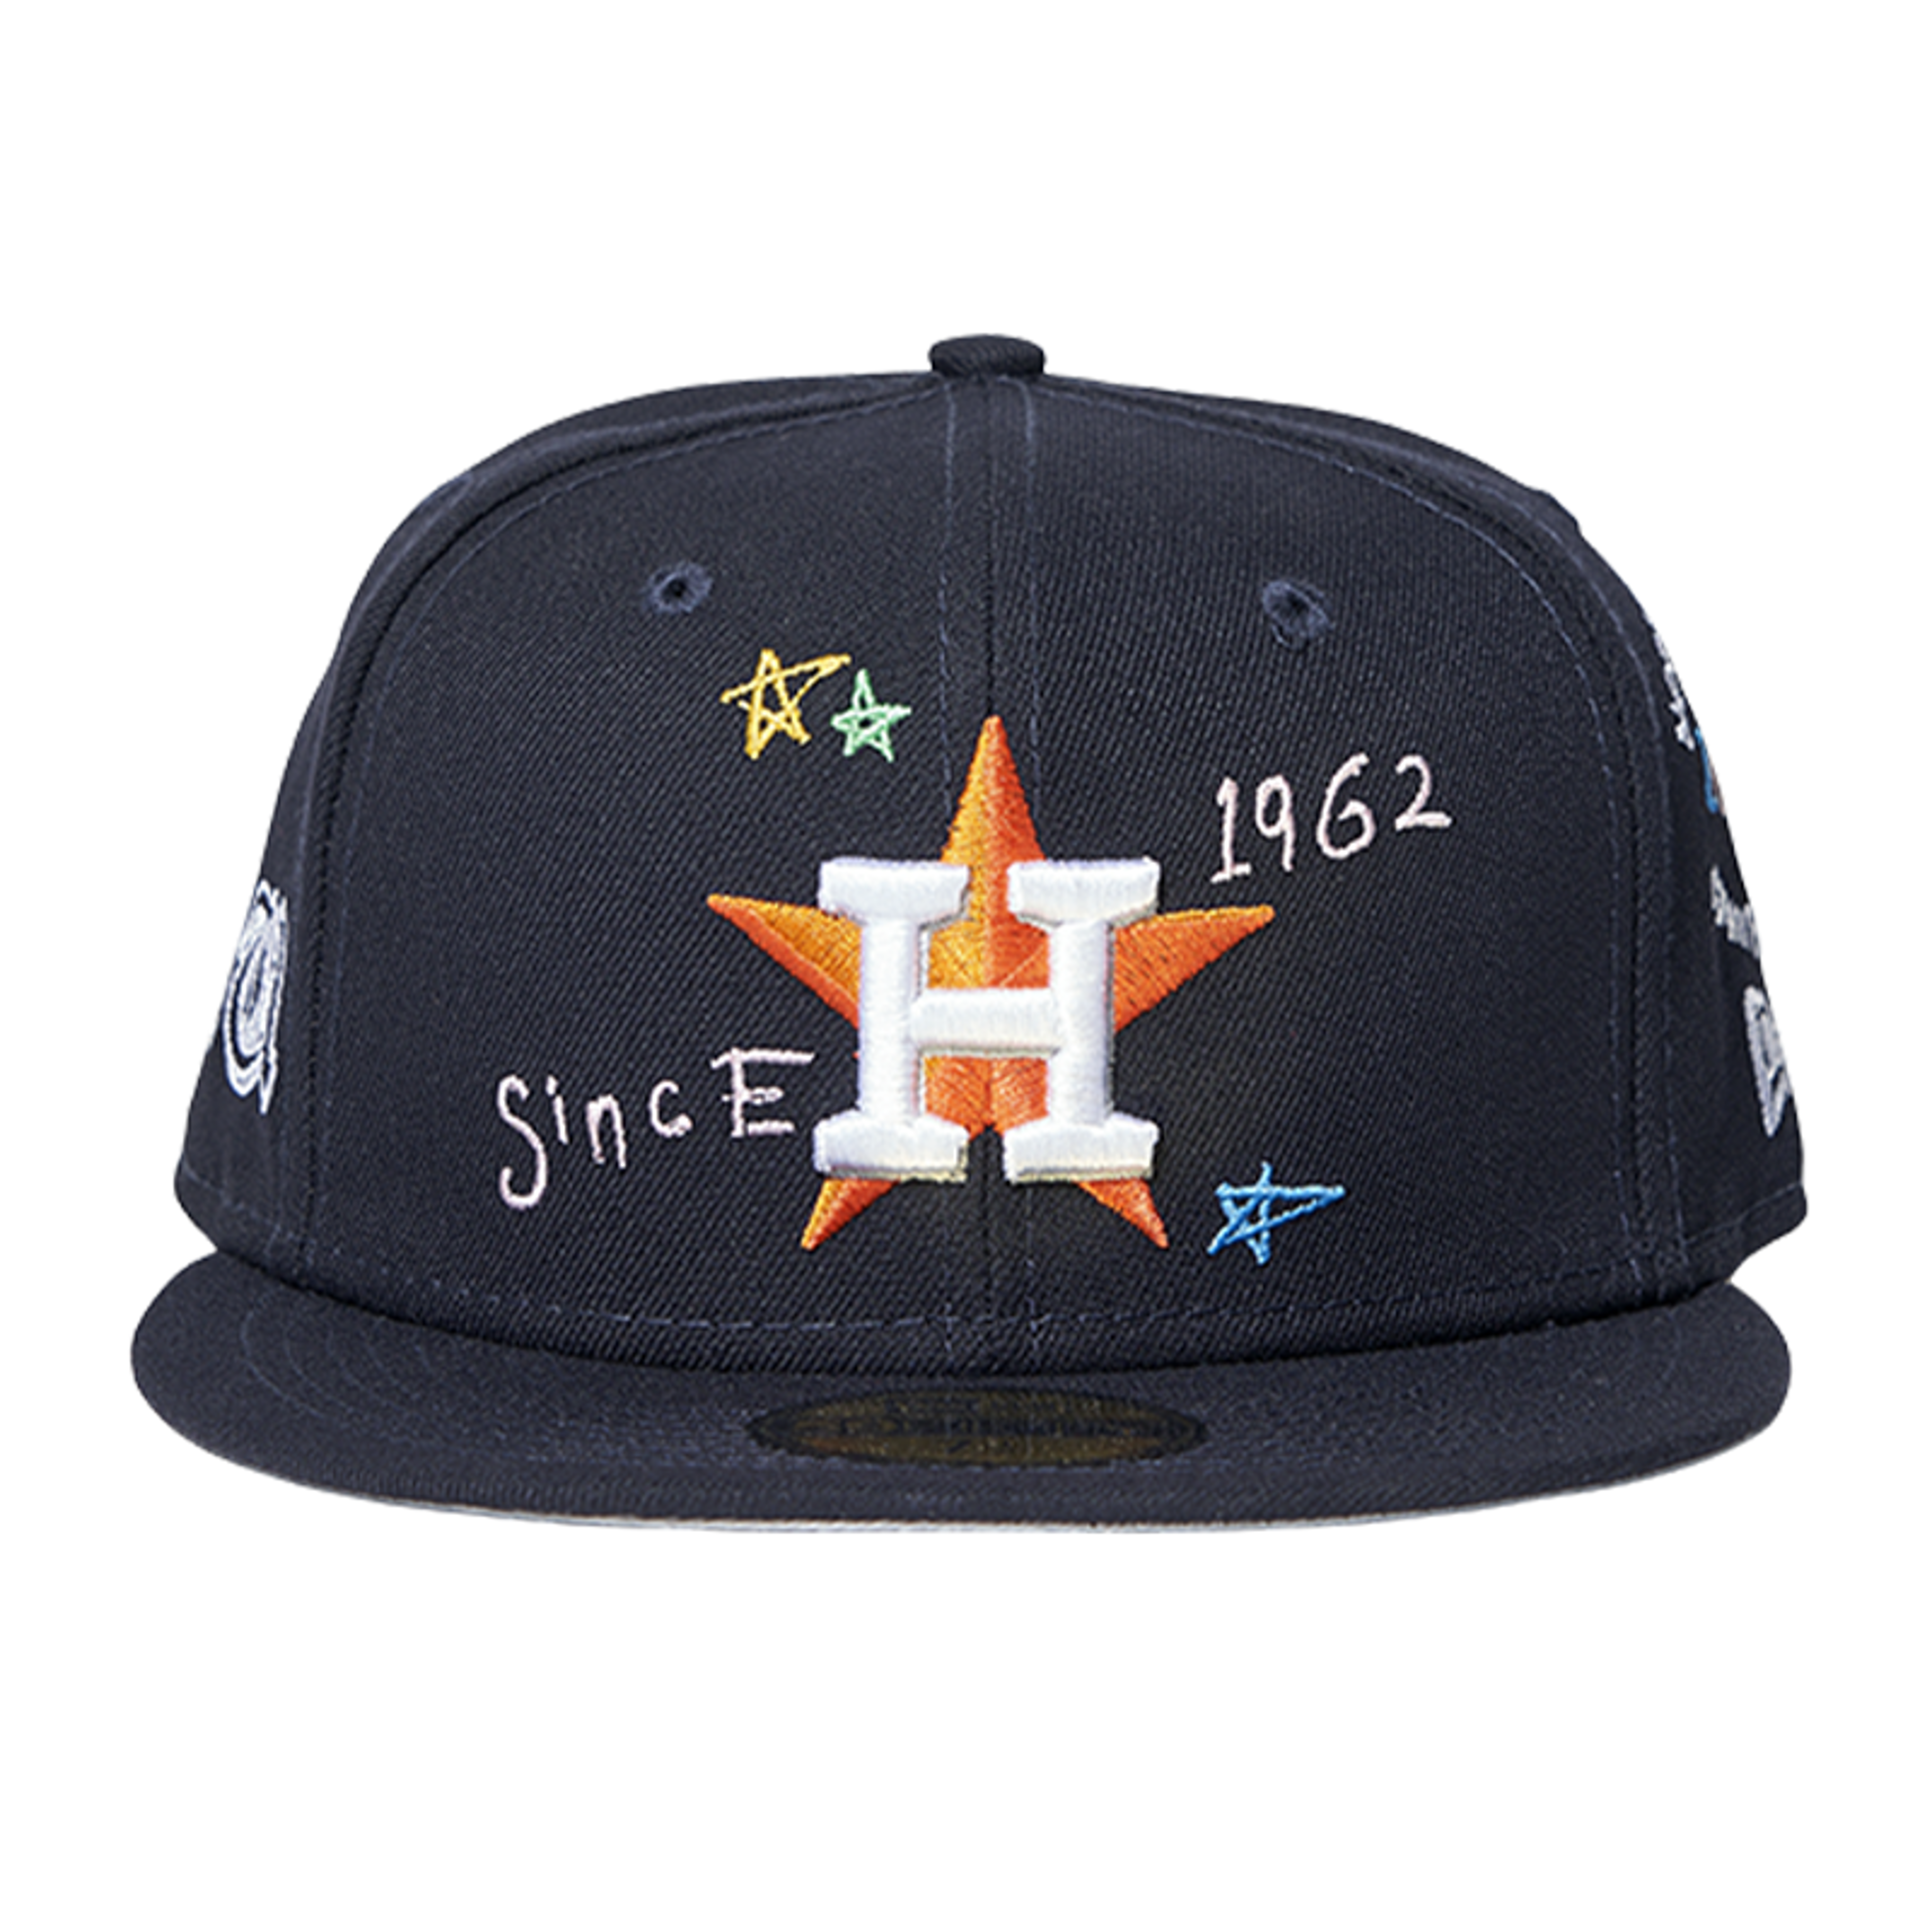 Houston Astros Baseball Cap New Era Hat 5950 Fitted MLB Black White 59Fifty